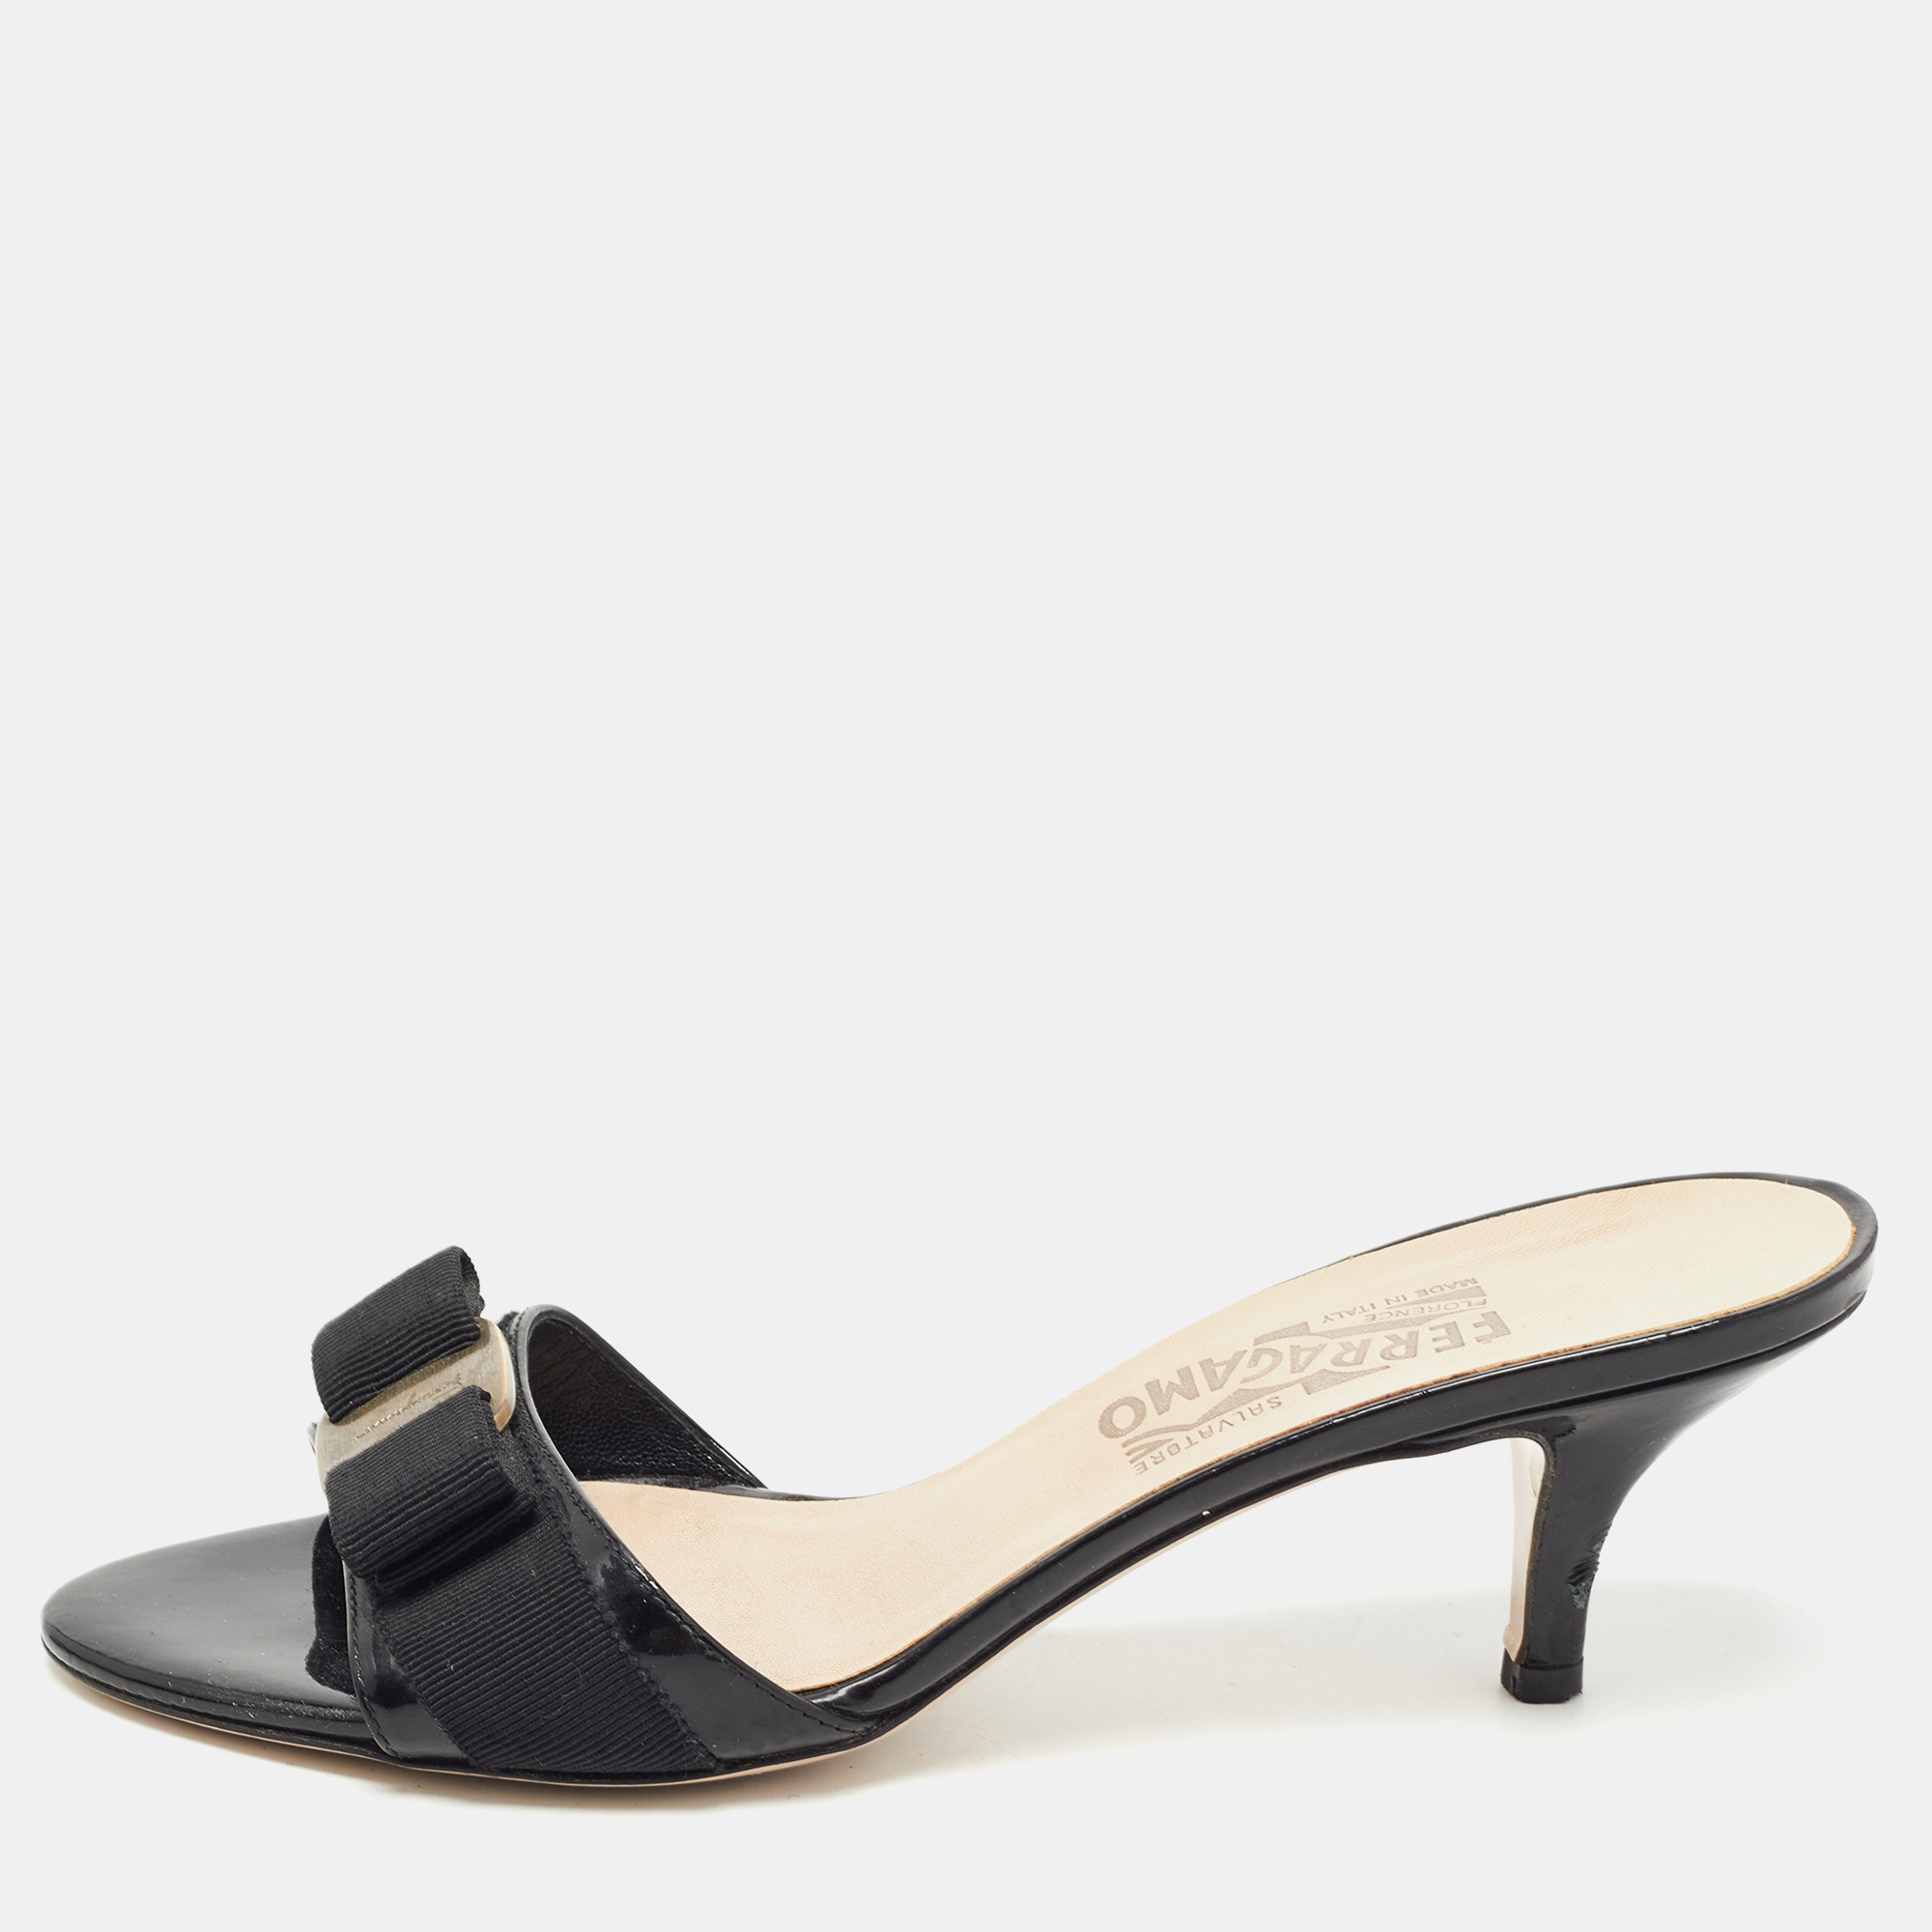 Pre-owned Salvatore Ferragamo Black Patent Leather Vara Bow Sandals Size 37.5